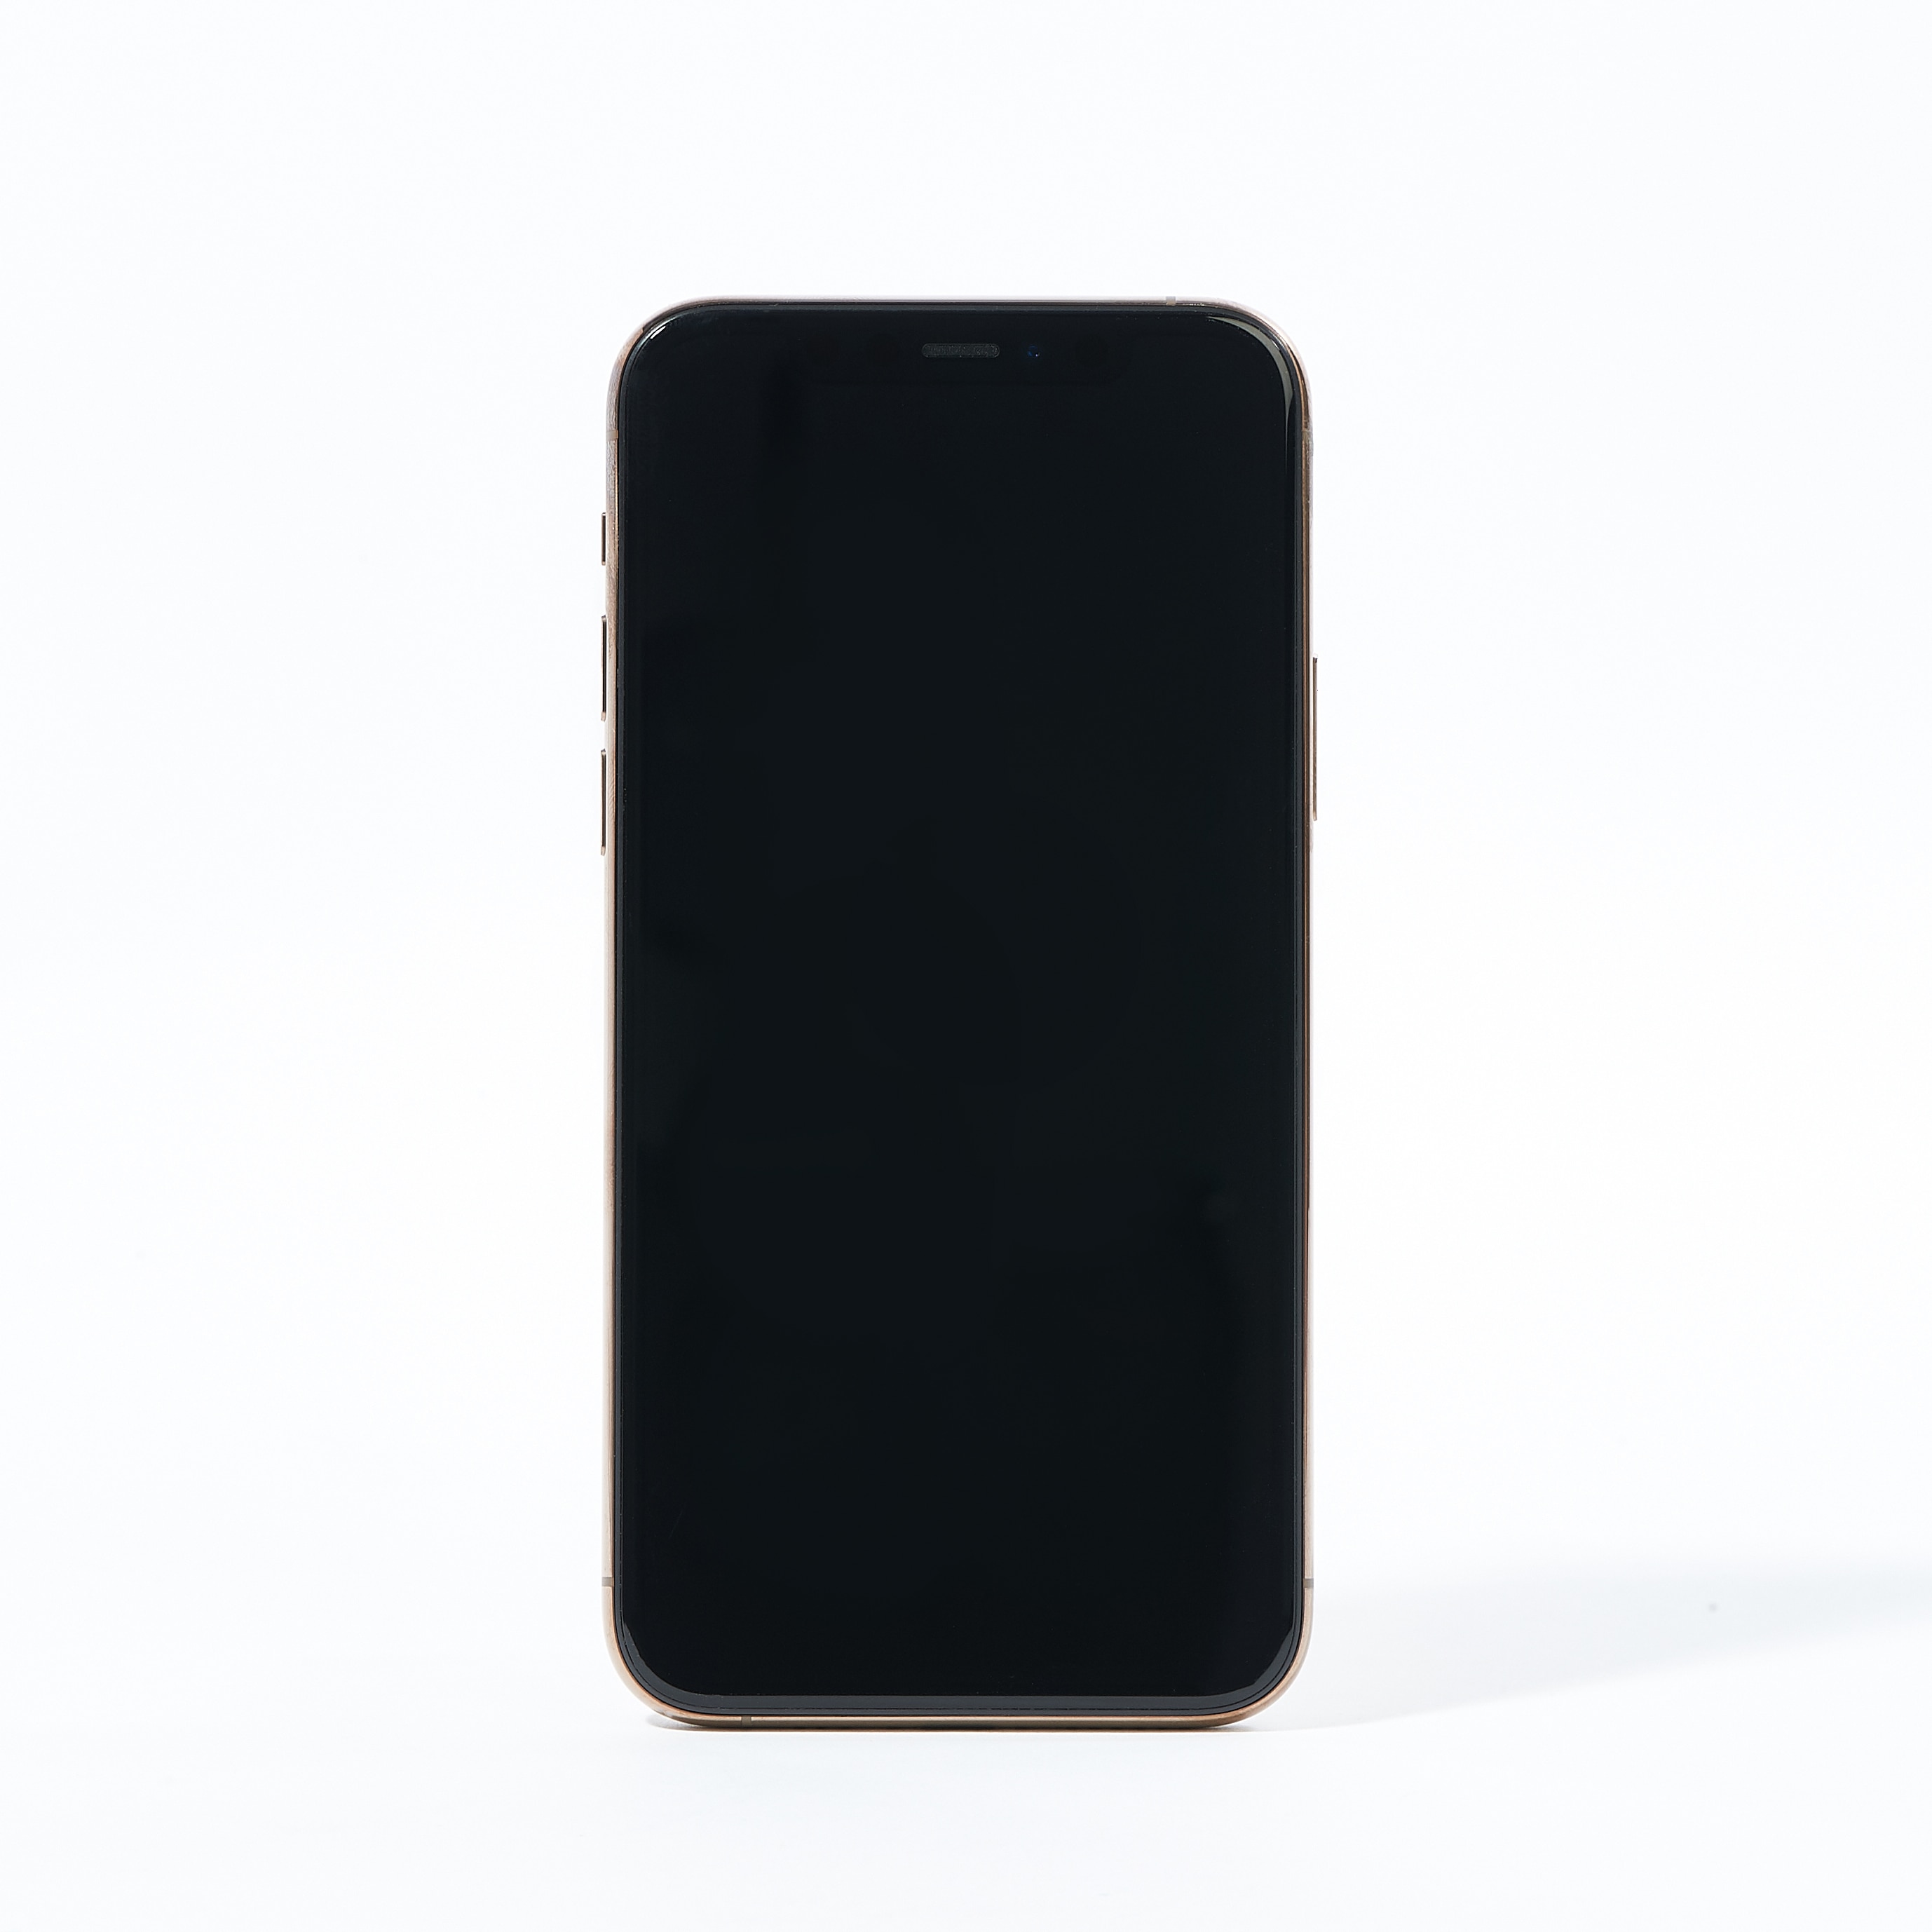 Electronics - Phones - Smartphones - Apple iPhone 11 Pro 256GB